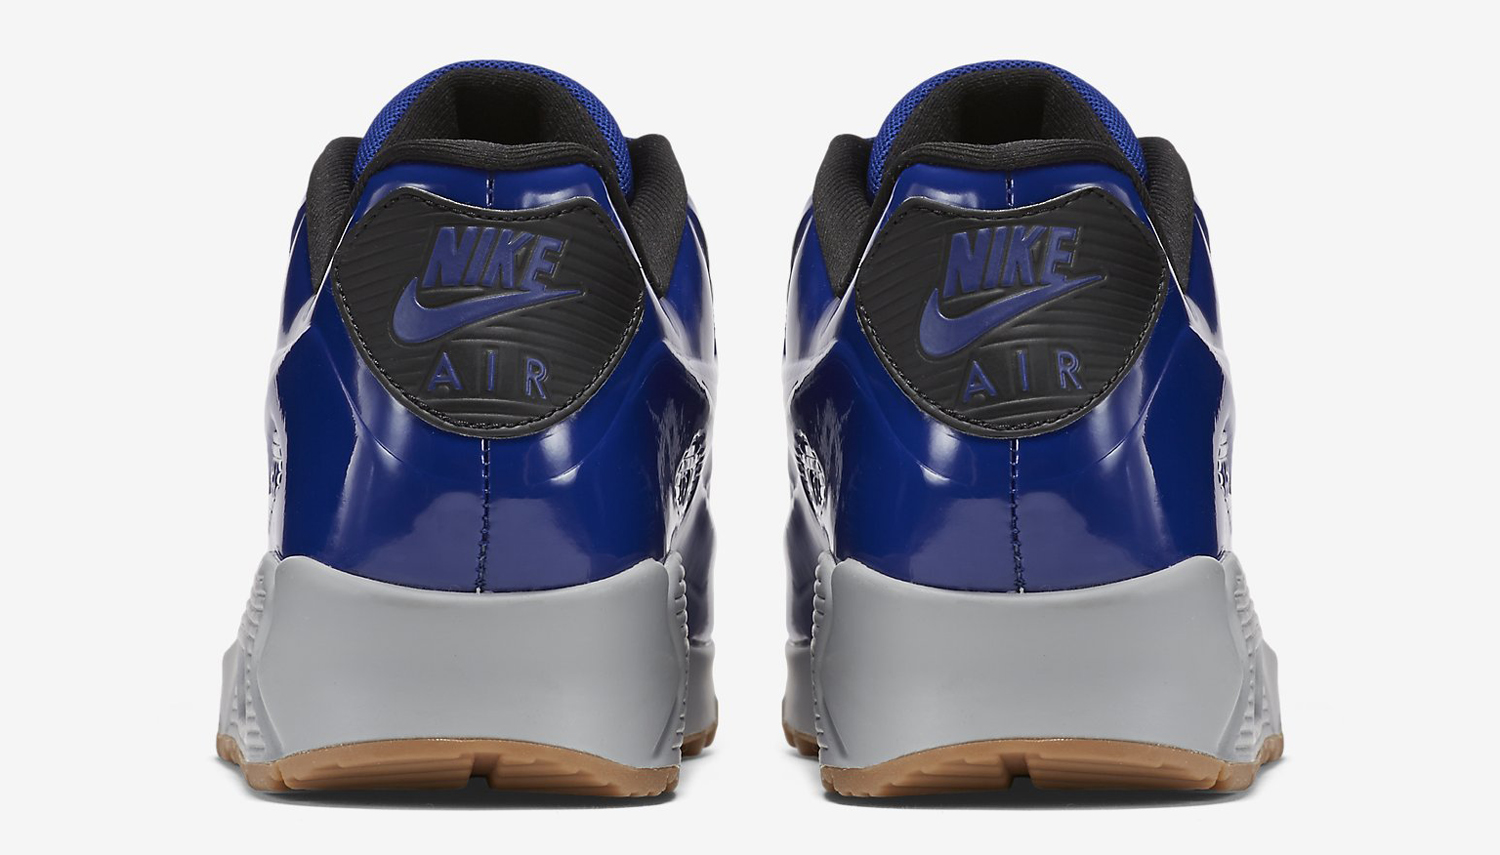 Nike Air Max VT Royal Blue - Sneaker Bar Detroit